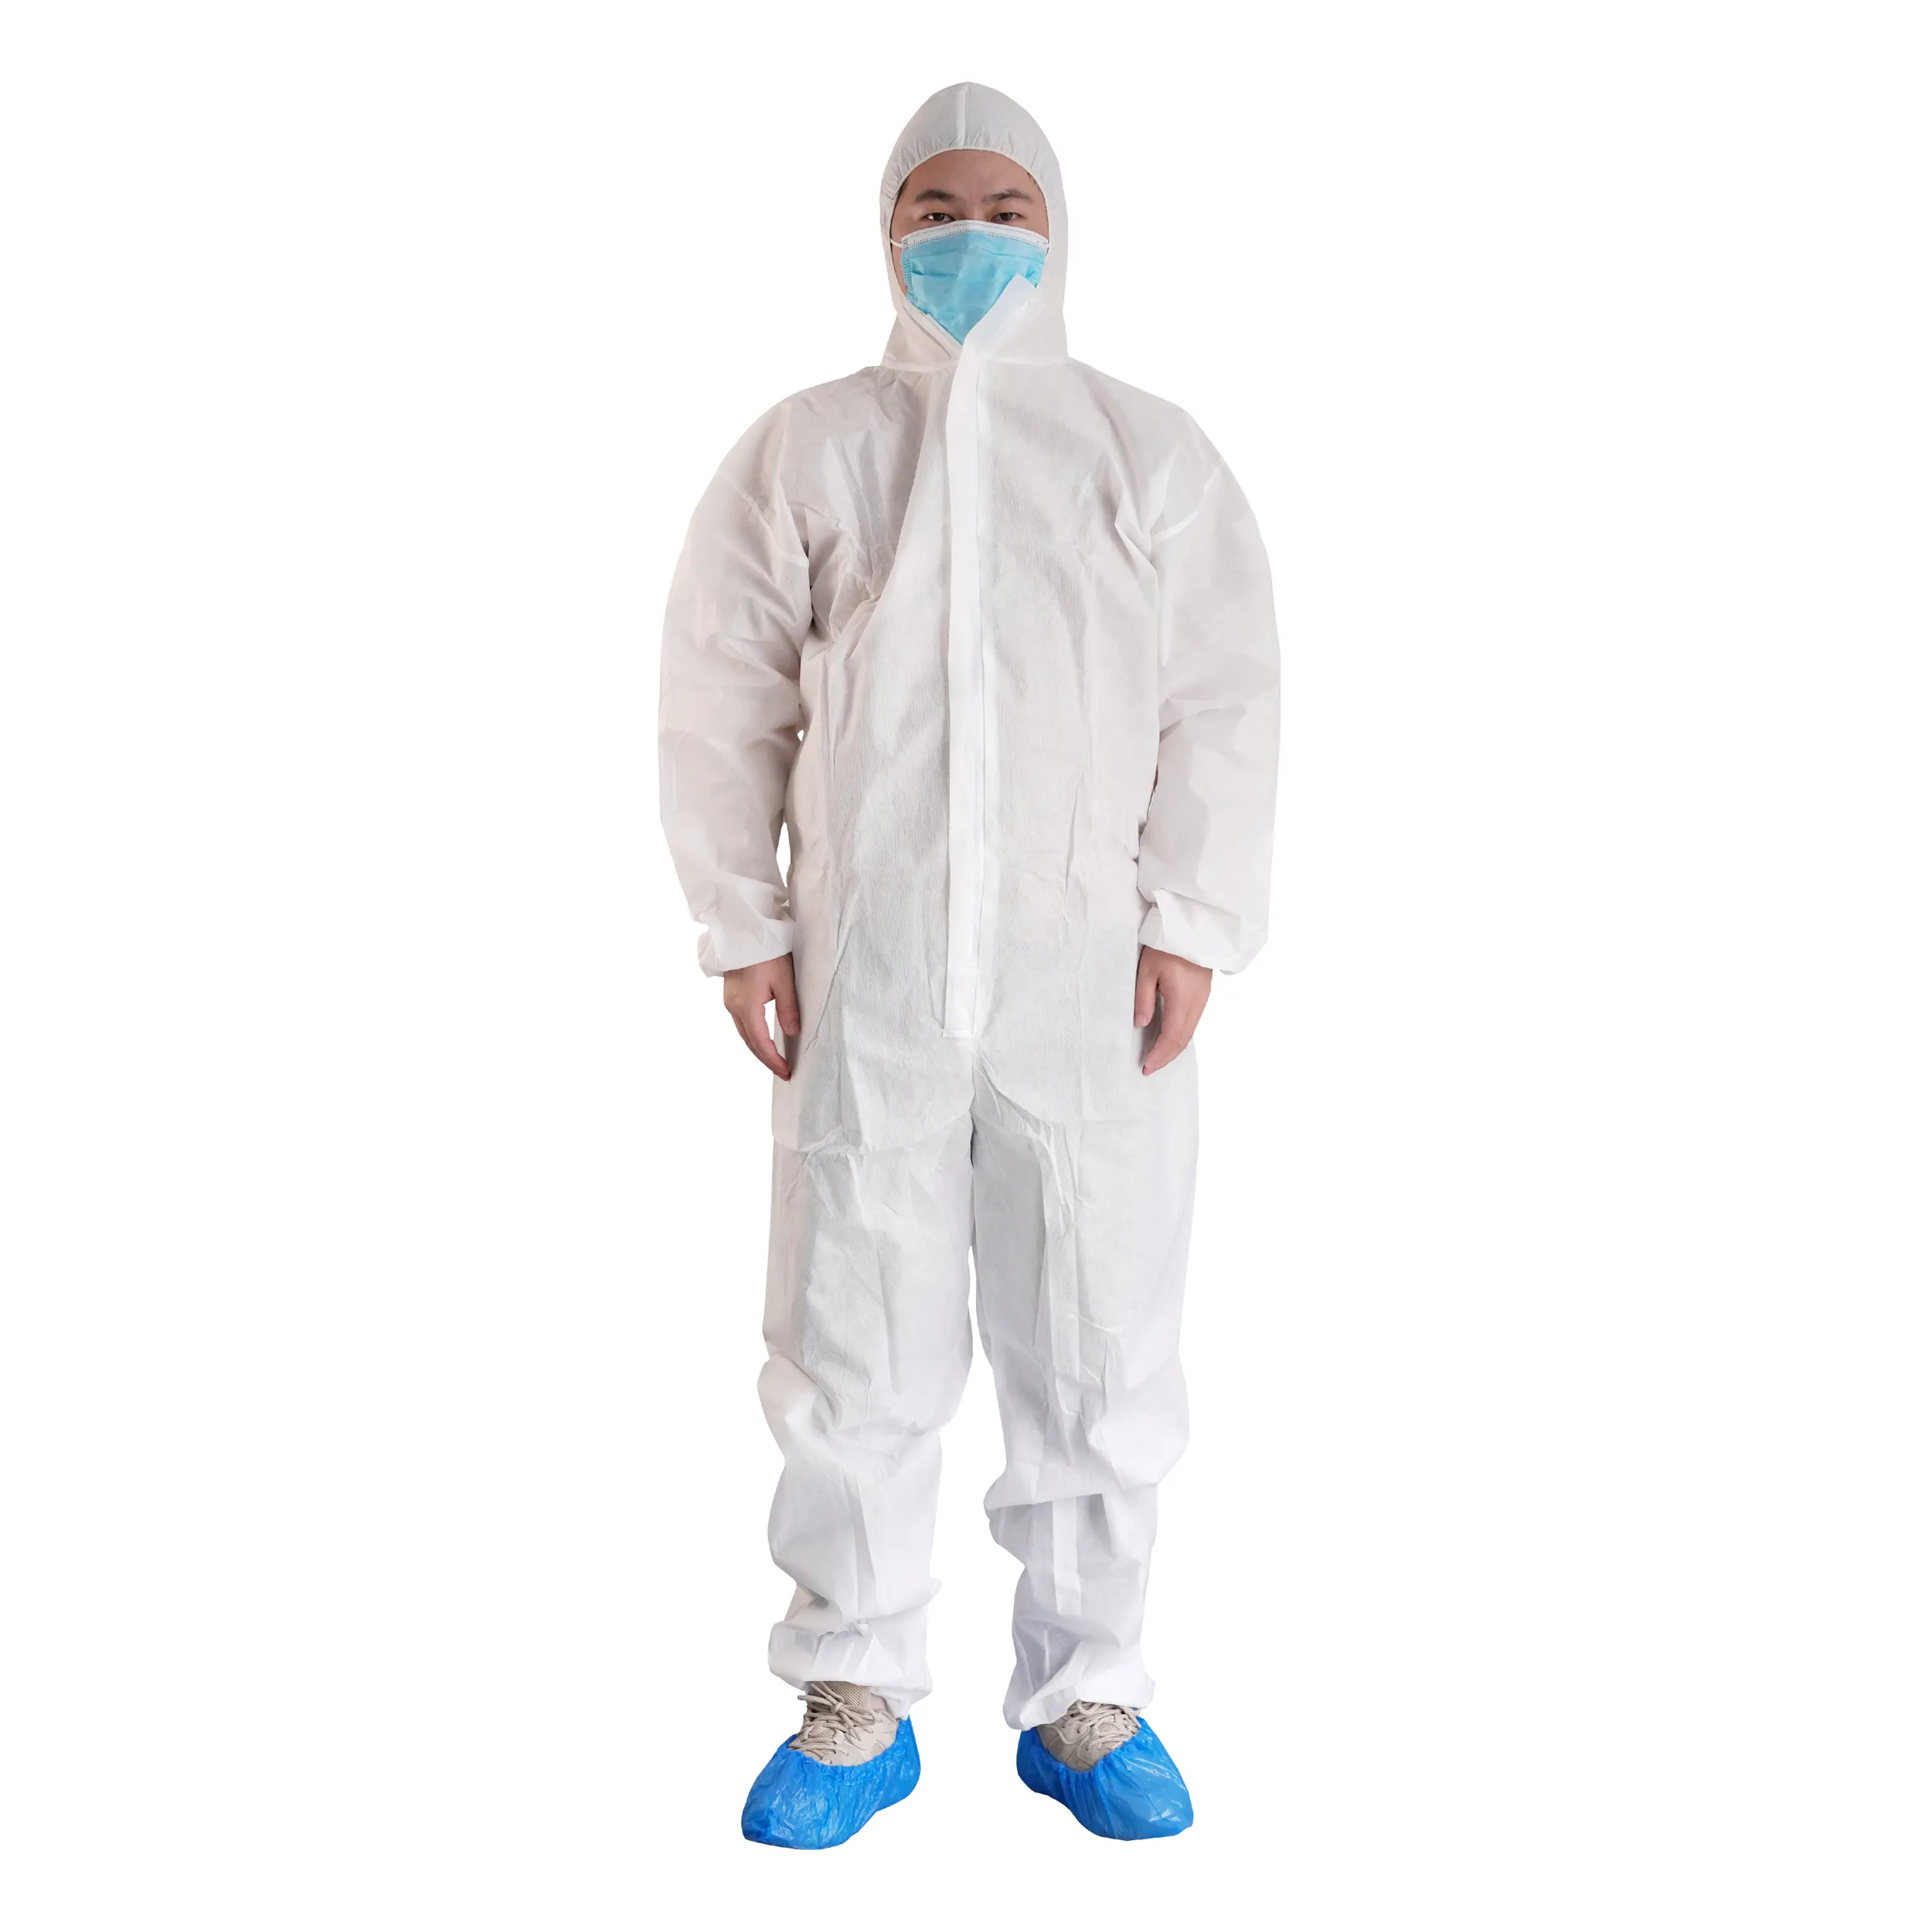 उच्च गुणवत्ता के साथ थोक thickened जीवाणुरोधी कपड़े सफेद workwear निविड़ अंधकार coverall फैक्टरी बेस्टसेलर